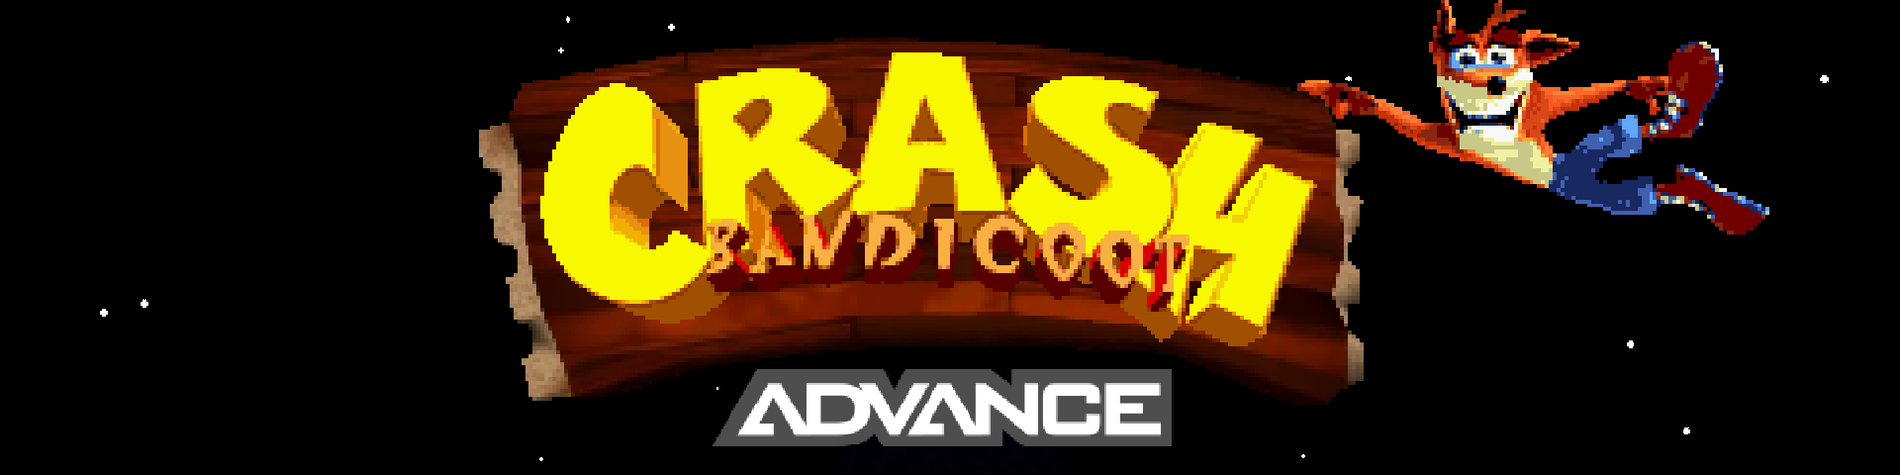 Crash Bandicoot Advance